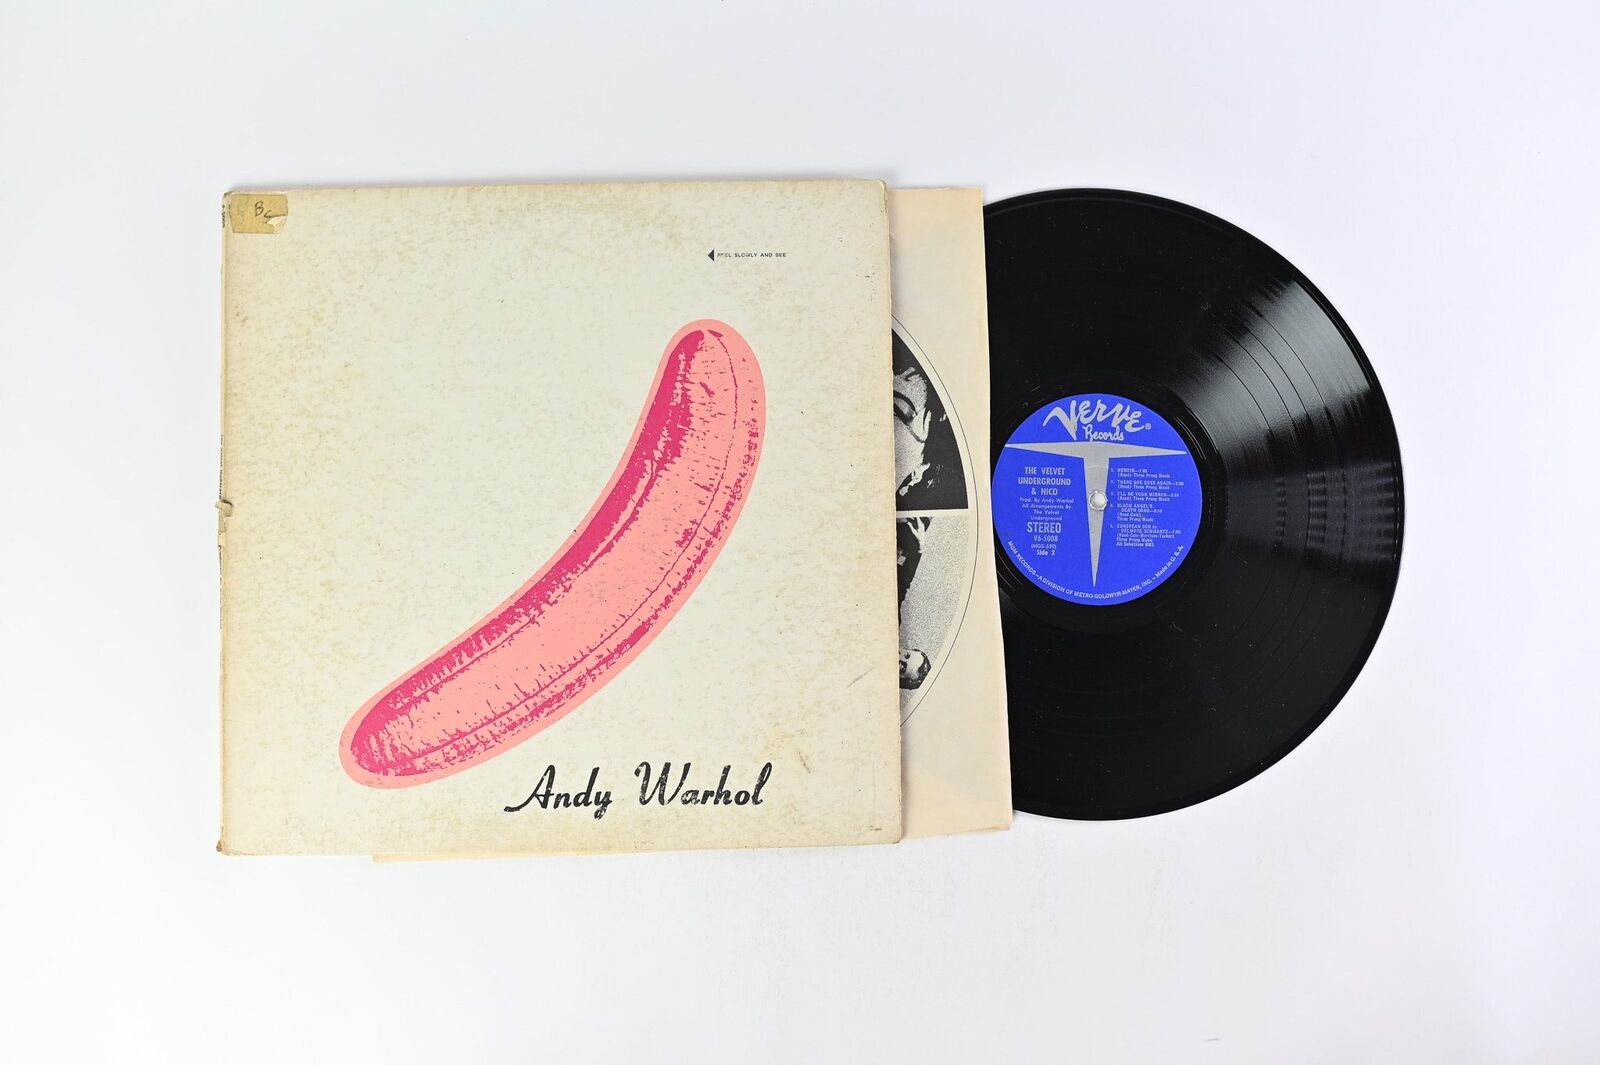 The Velvet Underground & Nico on Verve 1971 East Coast Stereo Pressing